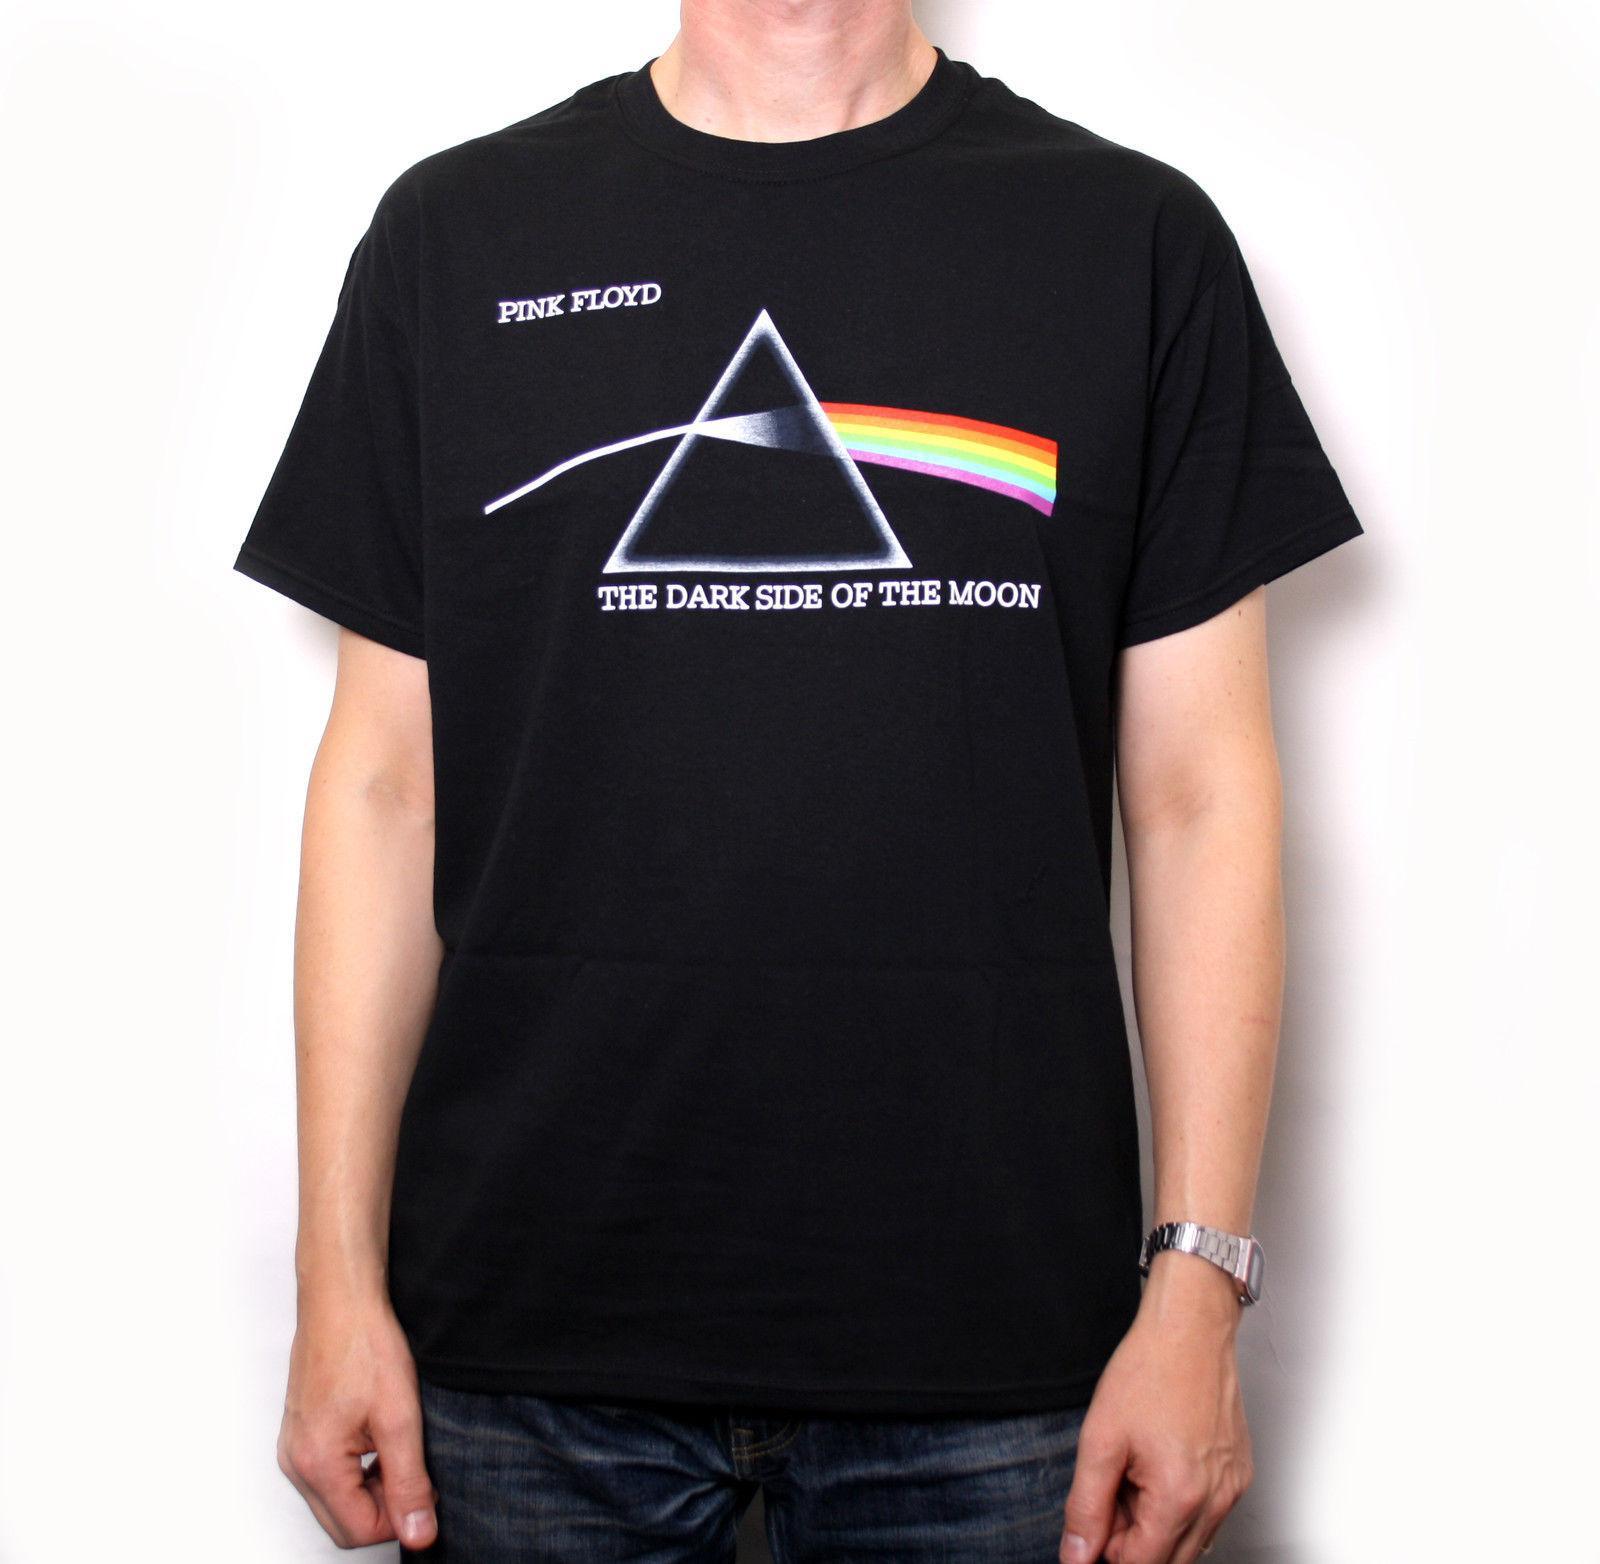 Zu Small Logo - Details Zu Pink Floyd T Shirt Dark Side Of The Moon Small Logo 100